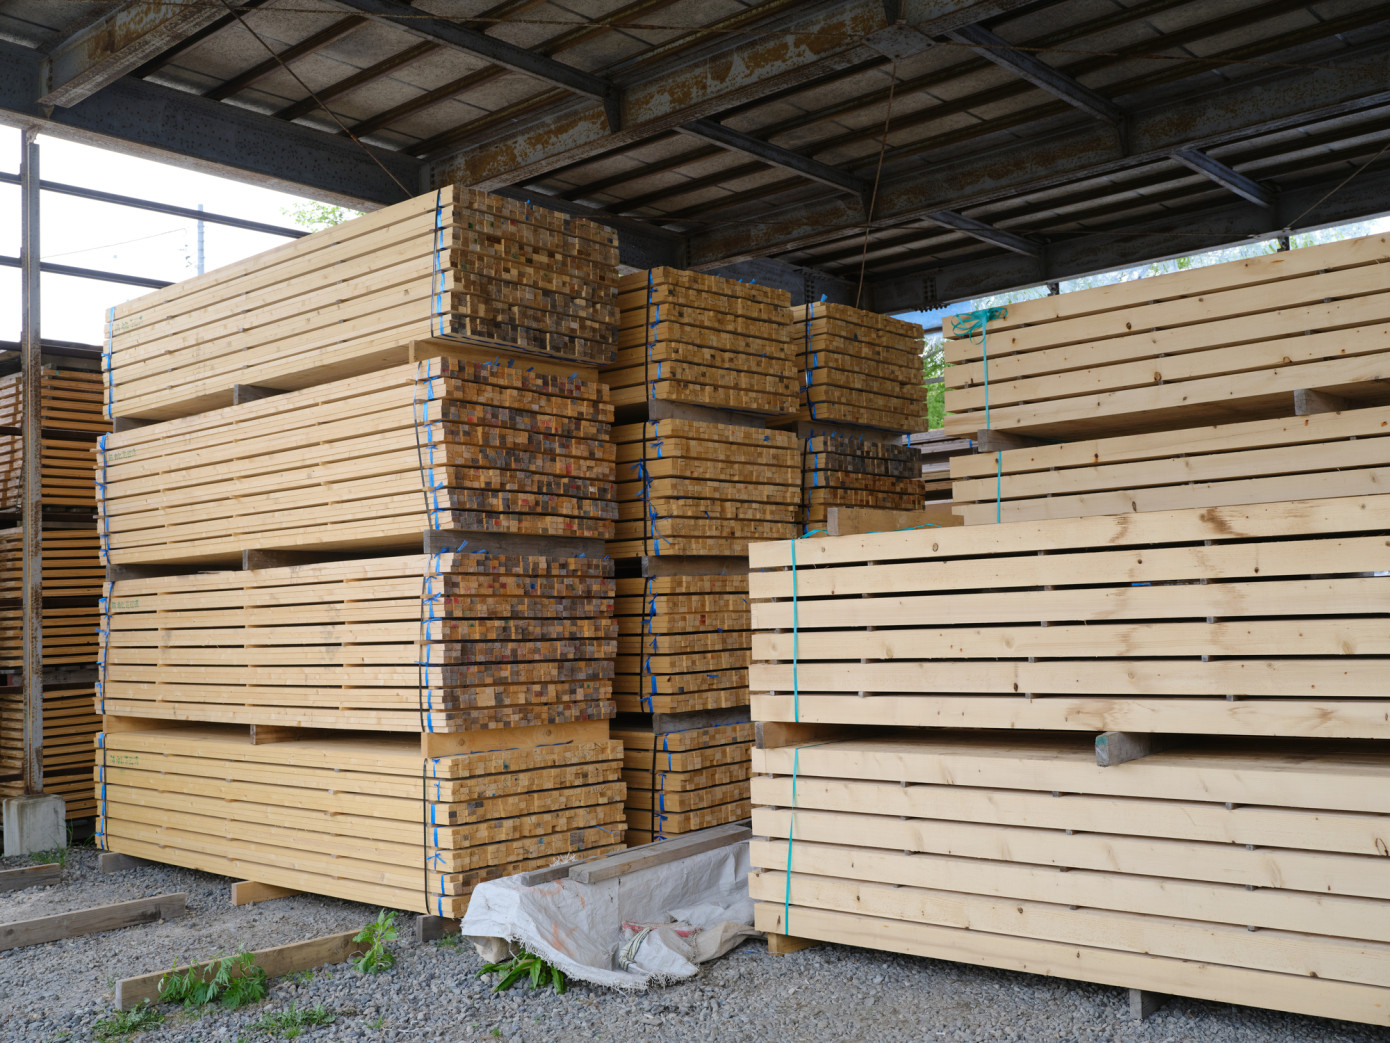 True winter weather brings lower lumber prices in North America